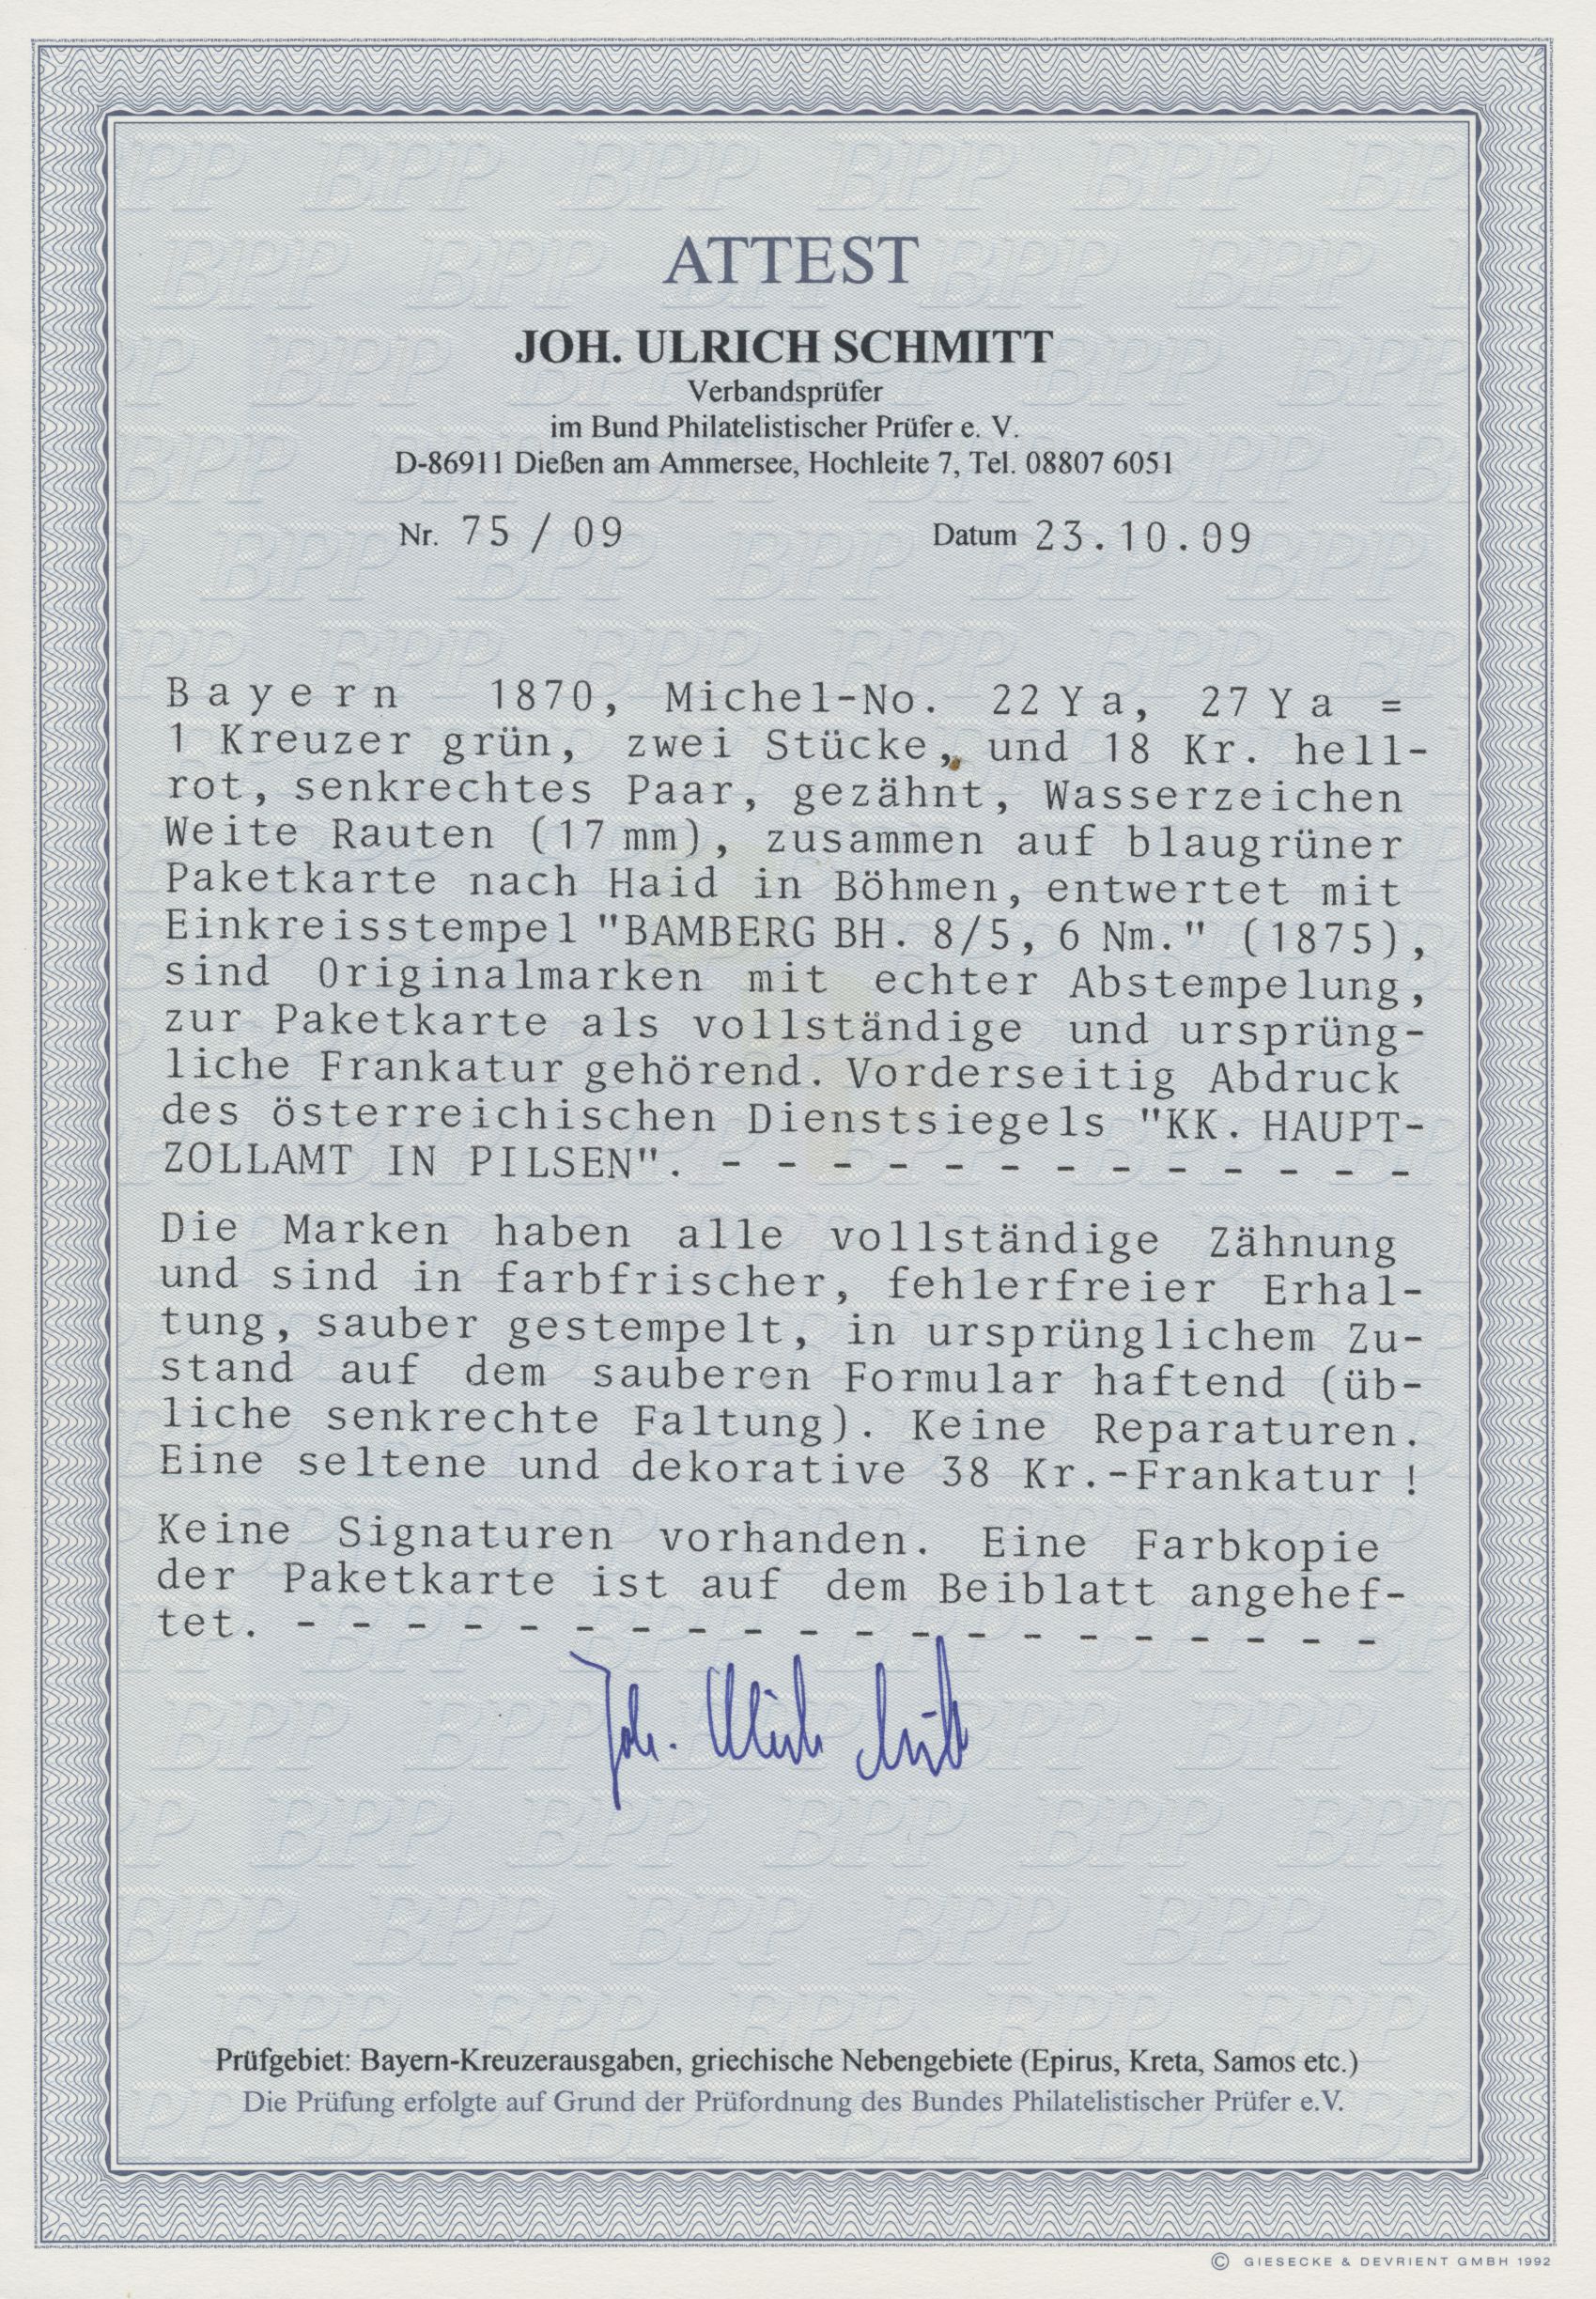 Lot 02766 - Bayern - Marken und Briefe  -  Auktionshaus Christoph Gärtner GmbH & Co. KG 53rd AUCTION - Day 3 Germany